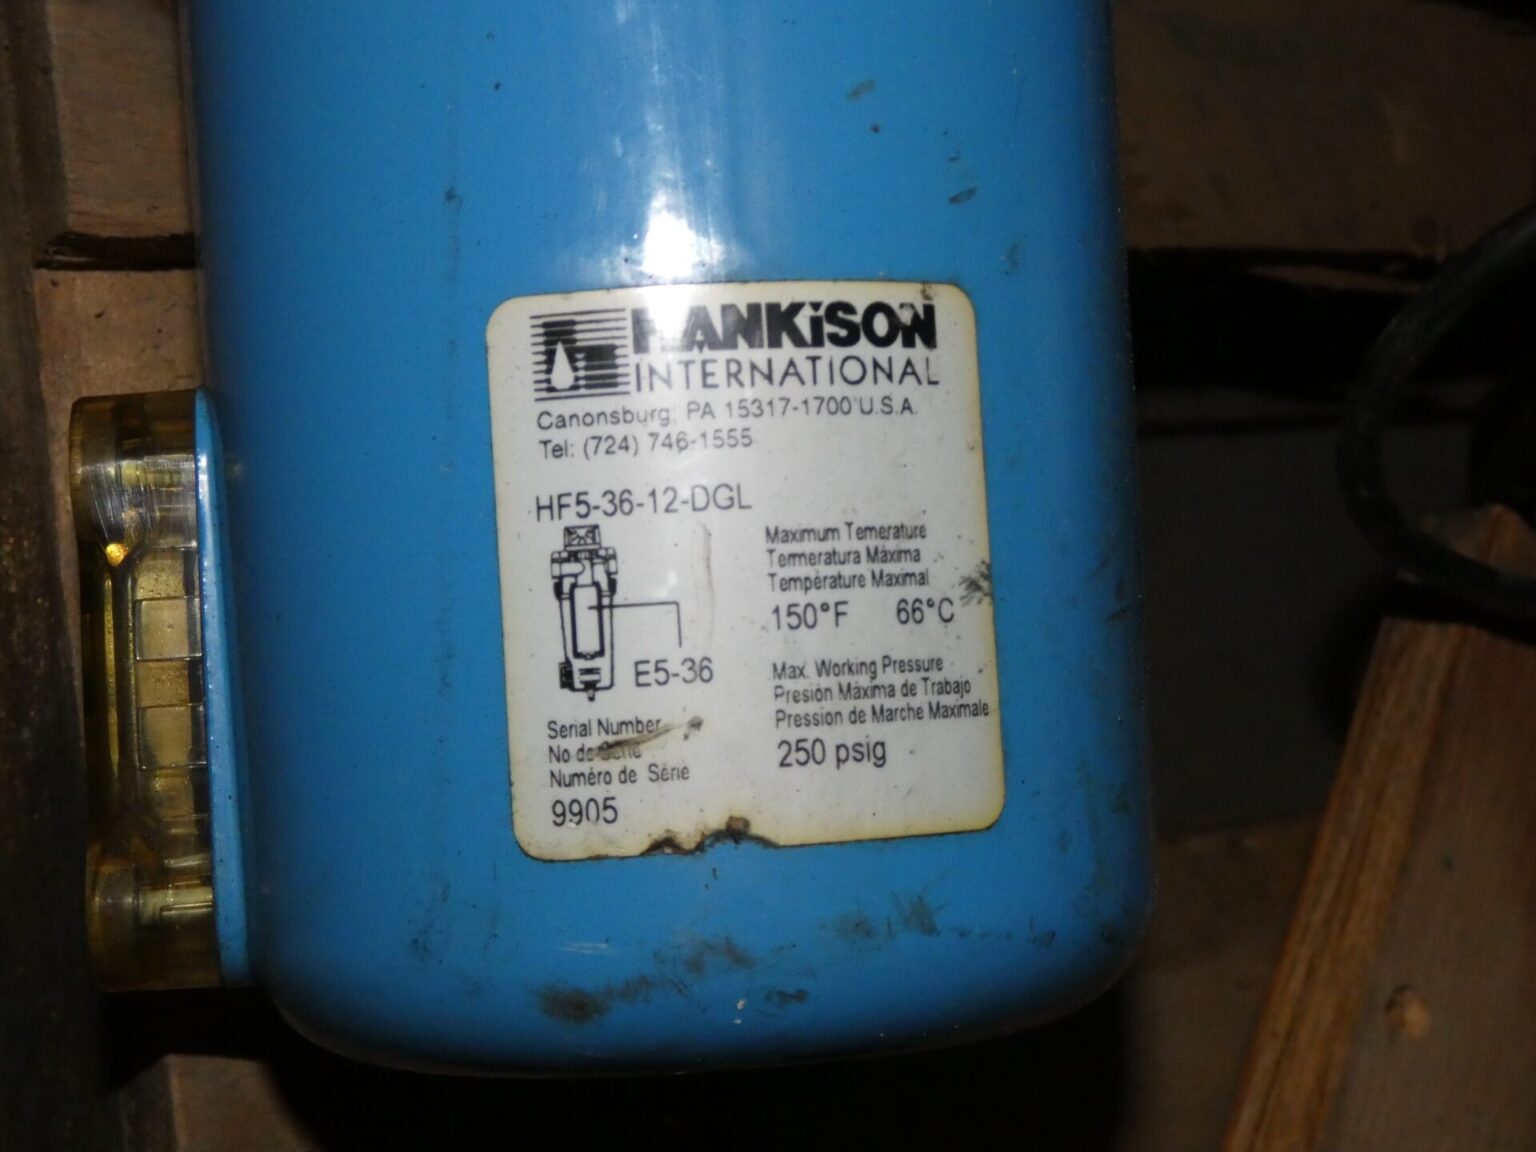 hankison air dryer maintenance manual